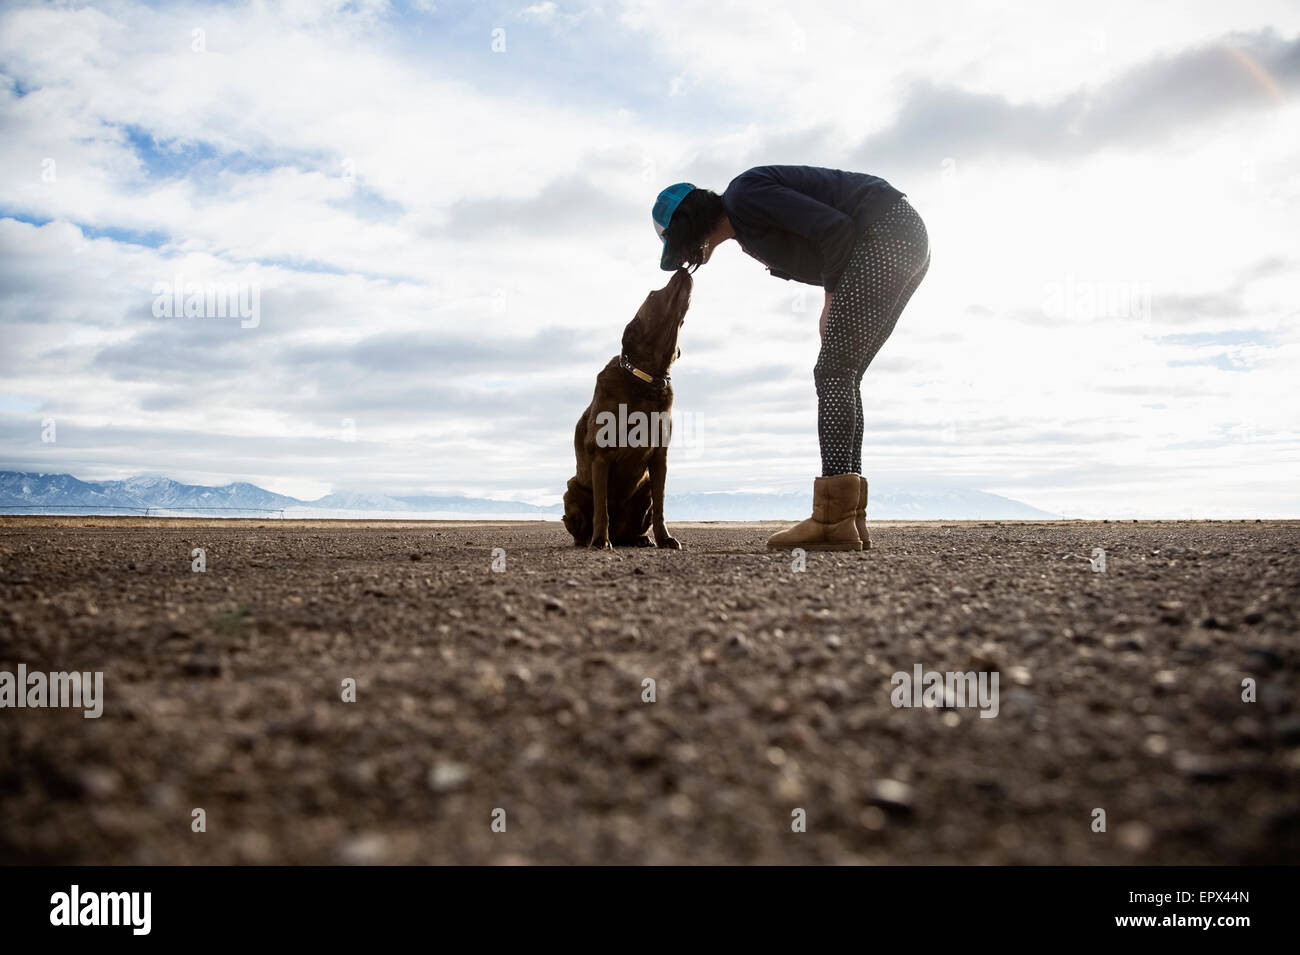 USA, Colorado, Woman with dog outdoors Stock Photo